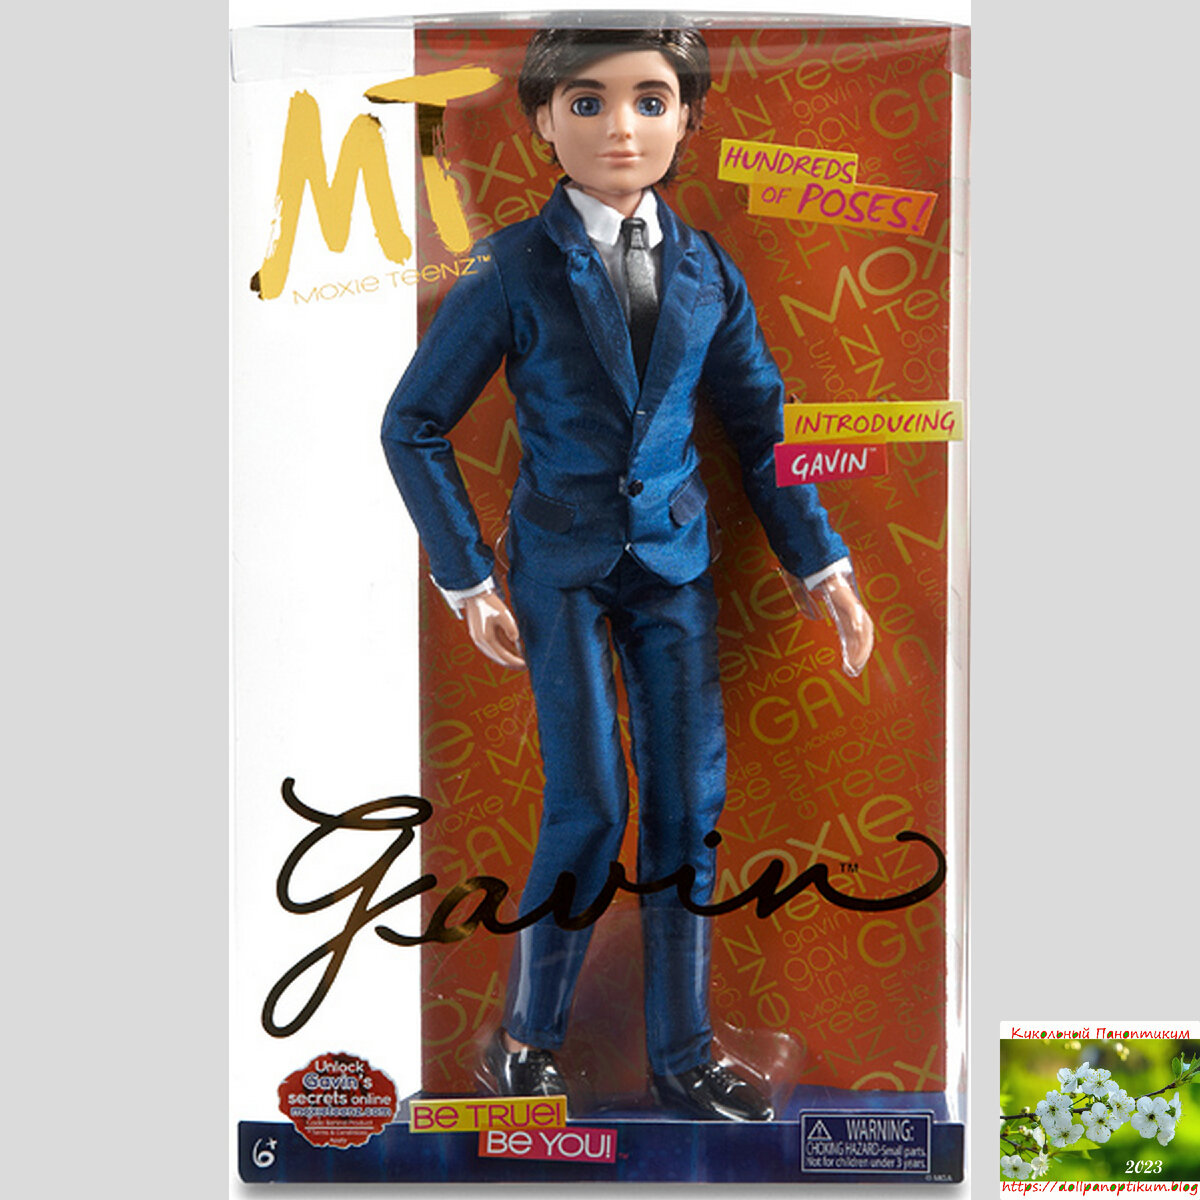 Куклы Мокси Тинс, купить куклы Moxie Teenz в интернет магазине 